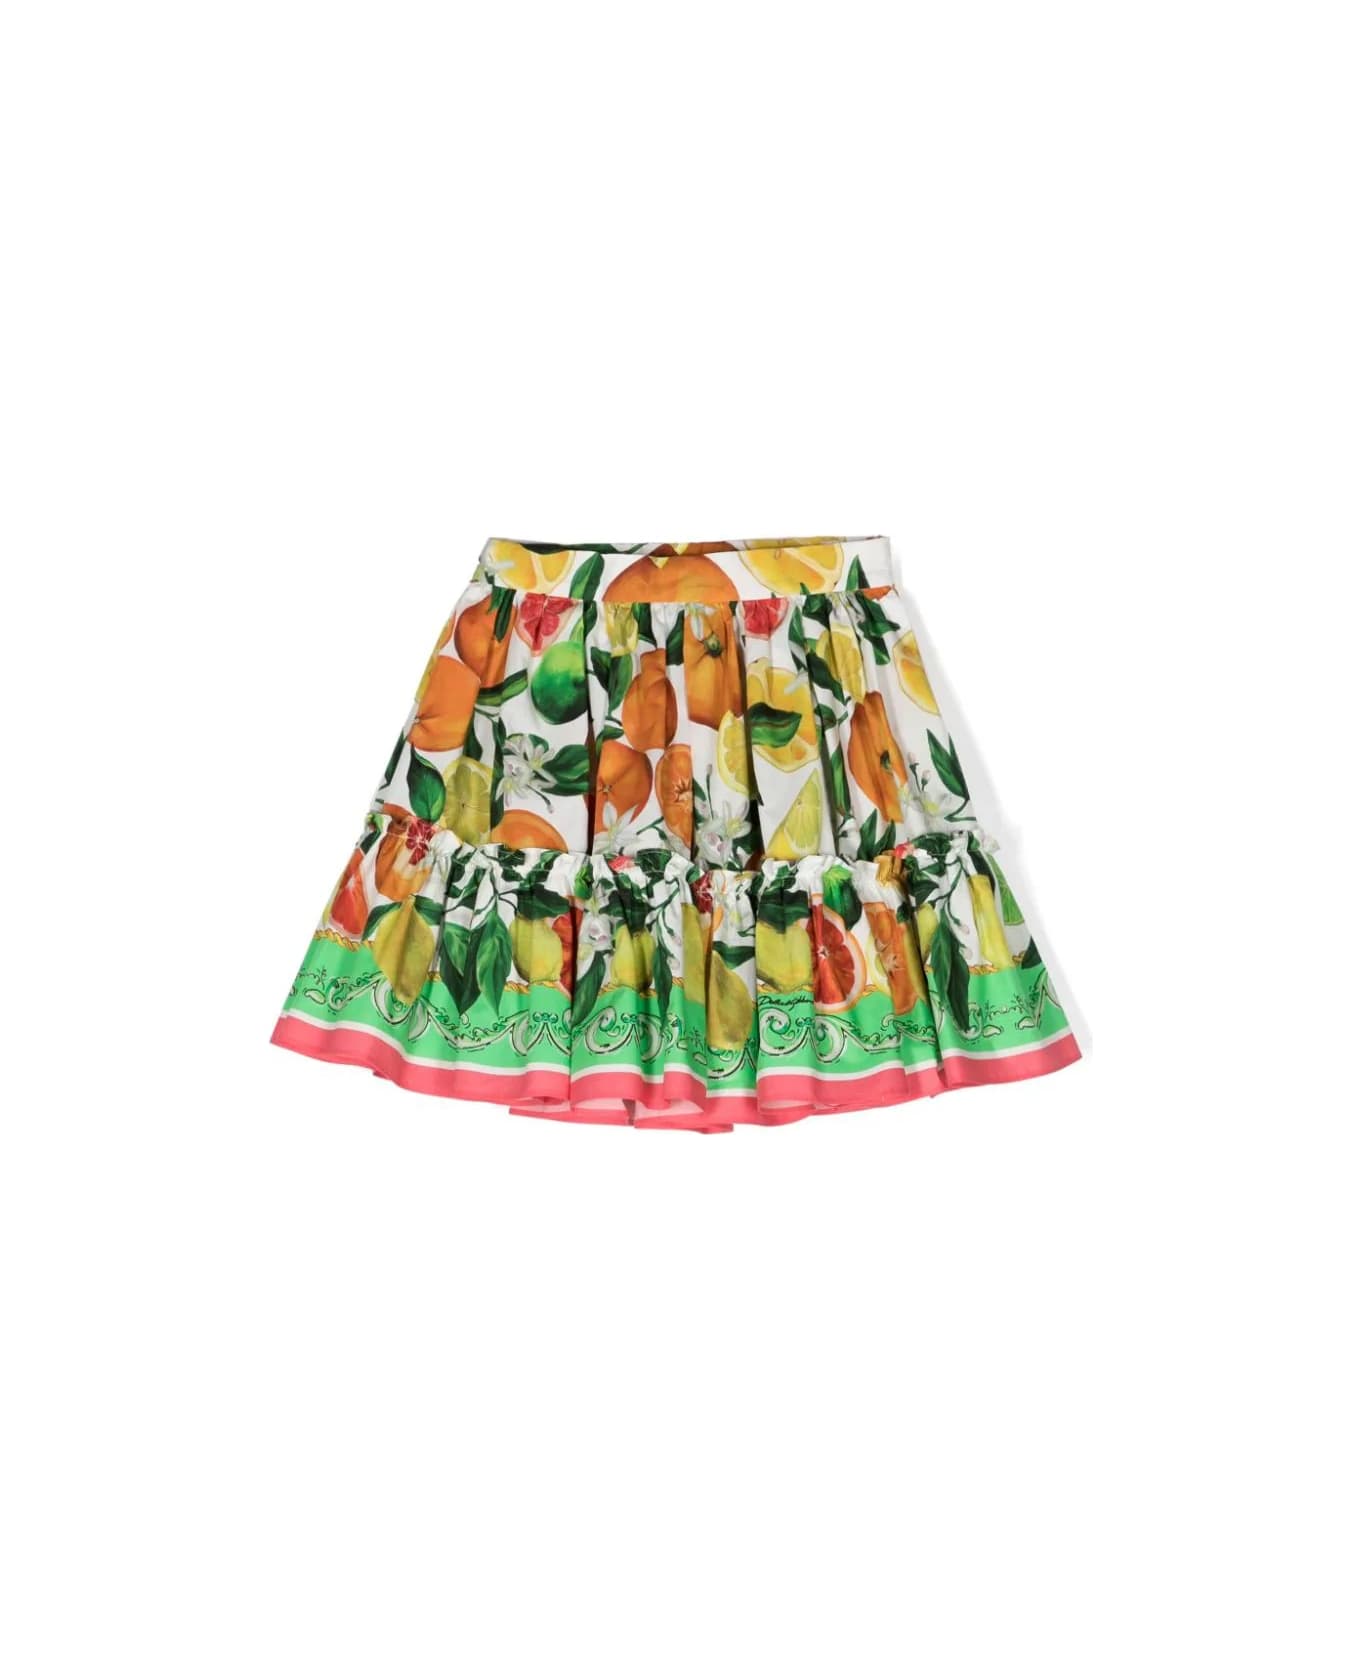 Dolce & Gabbana Miniskirt With Orange And Lemon Print - Multicolour ボトムス